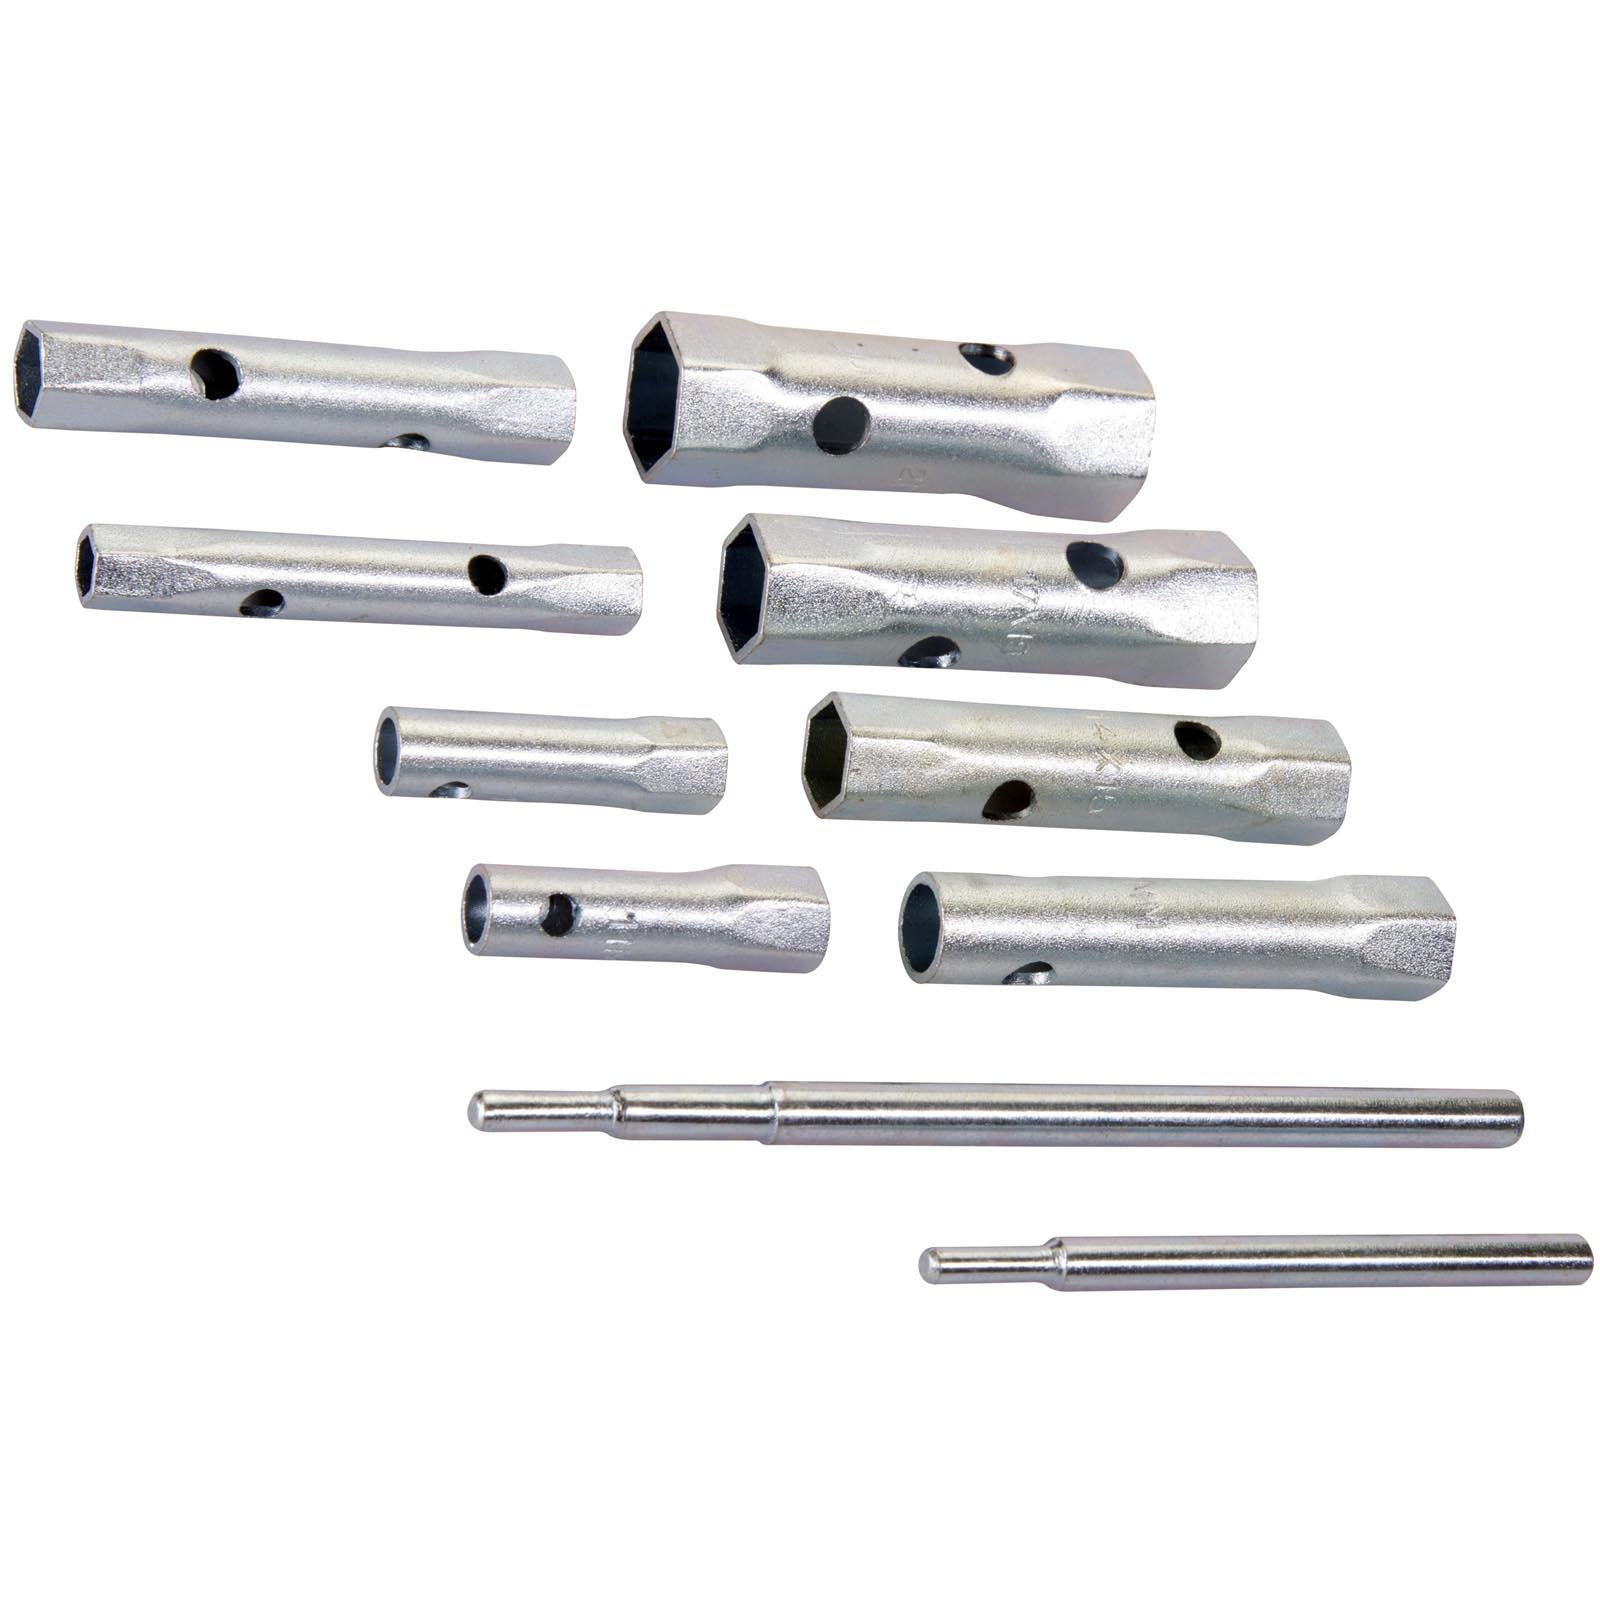 Silverline 8 Piece Metric Box Spanner Set 8-22mm Spark Plug Plumbers Tubular